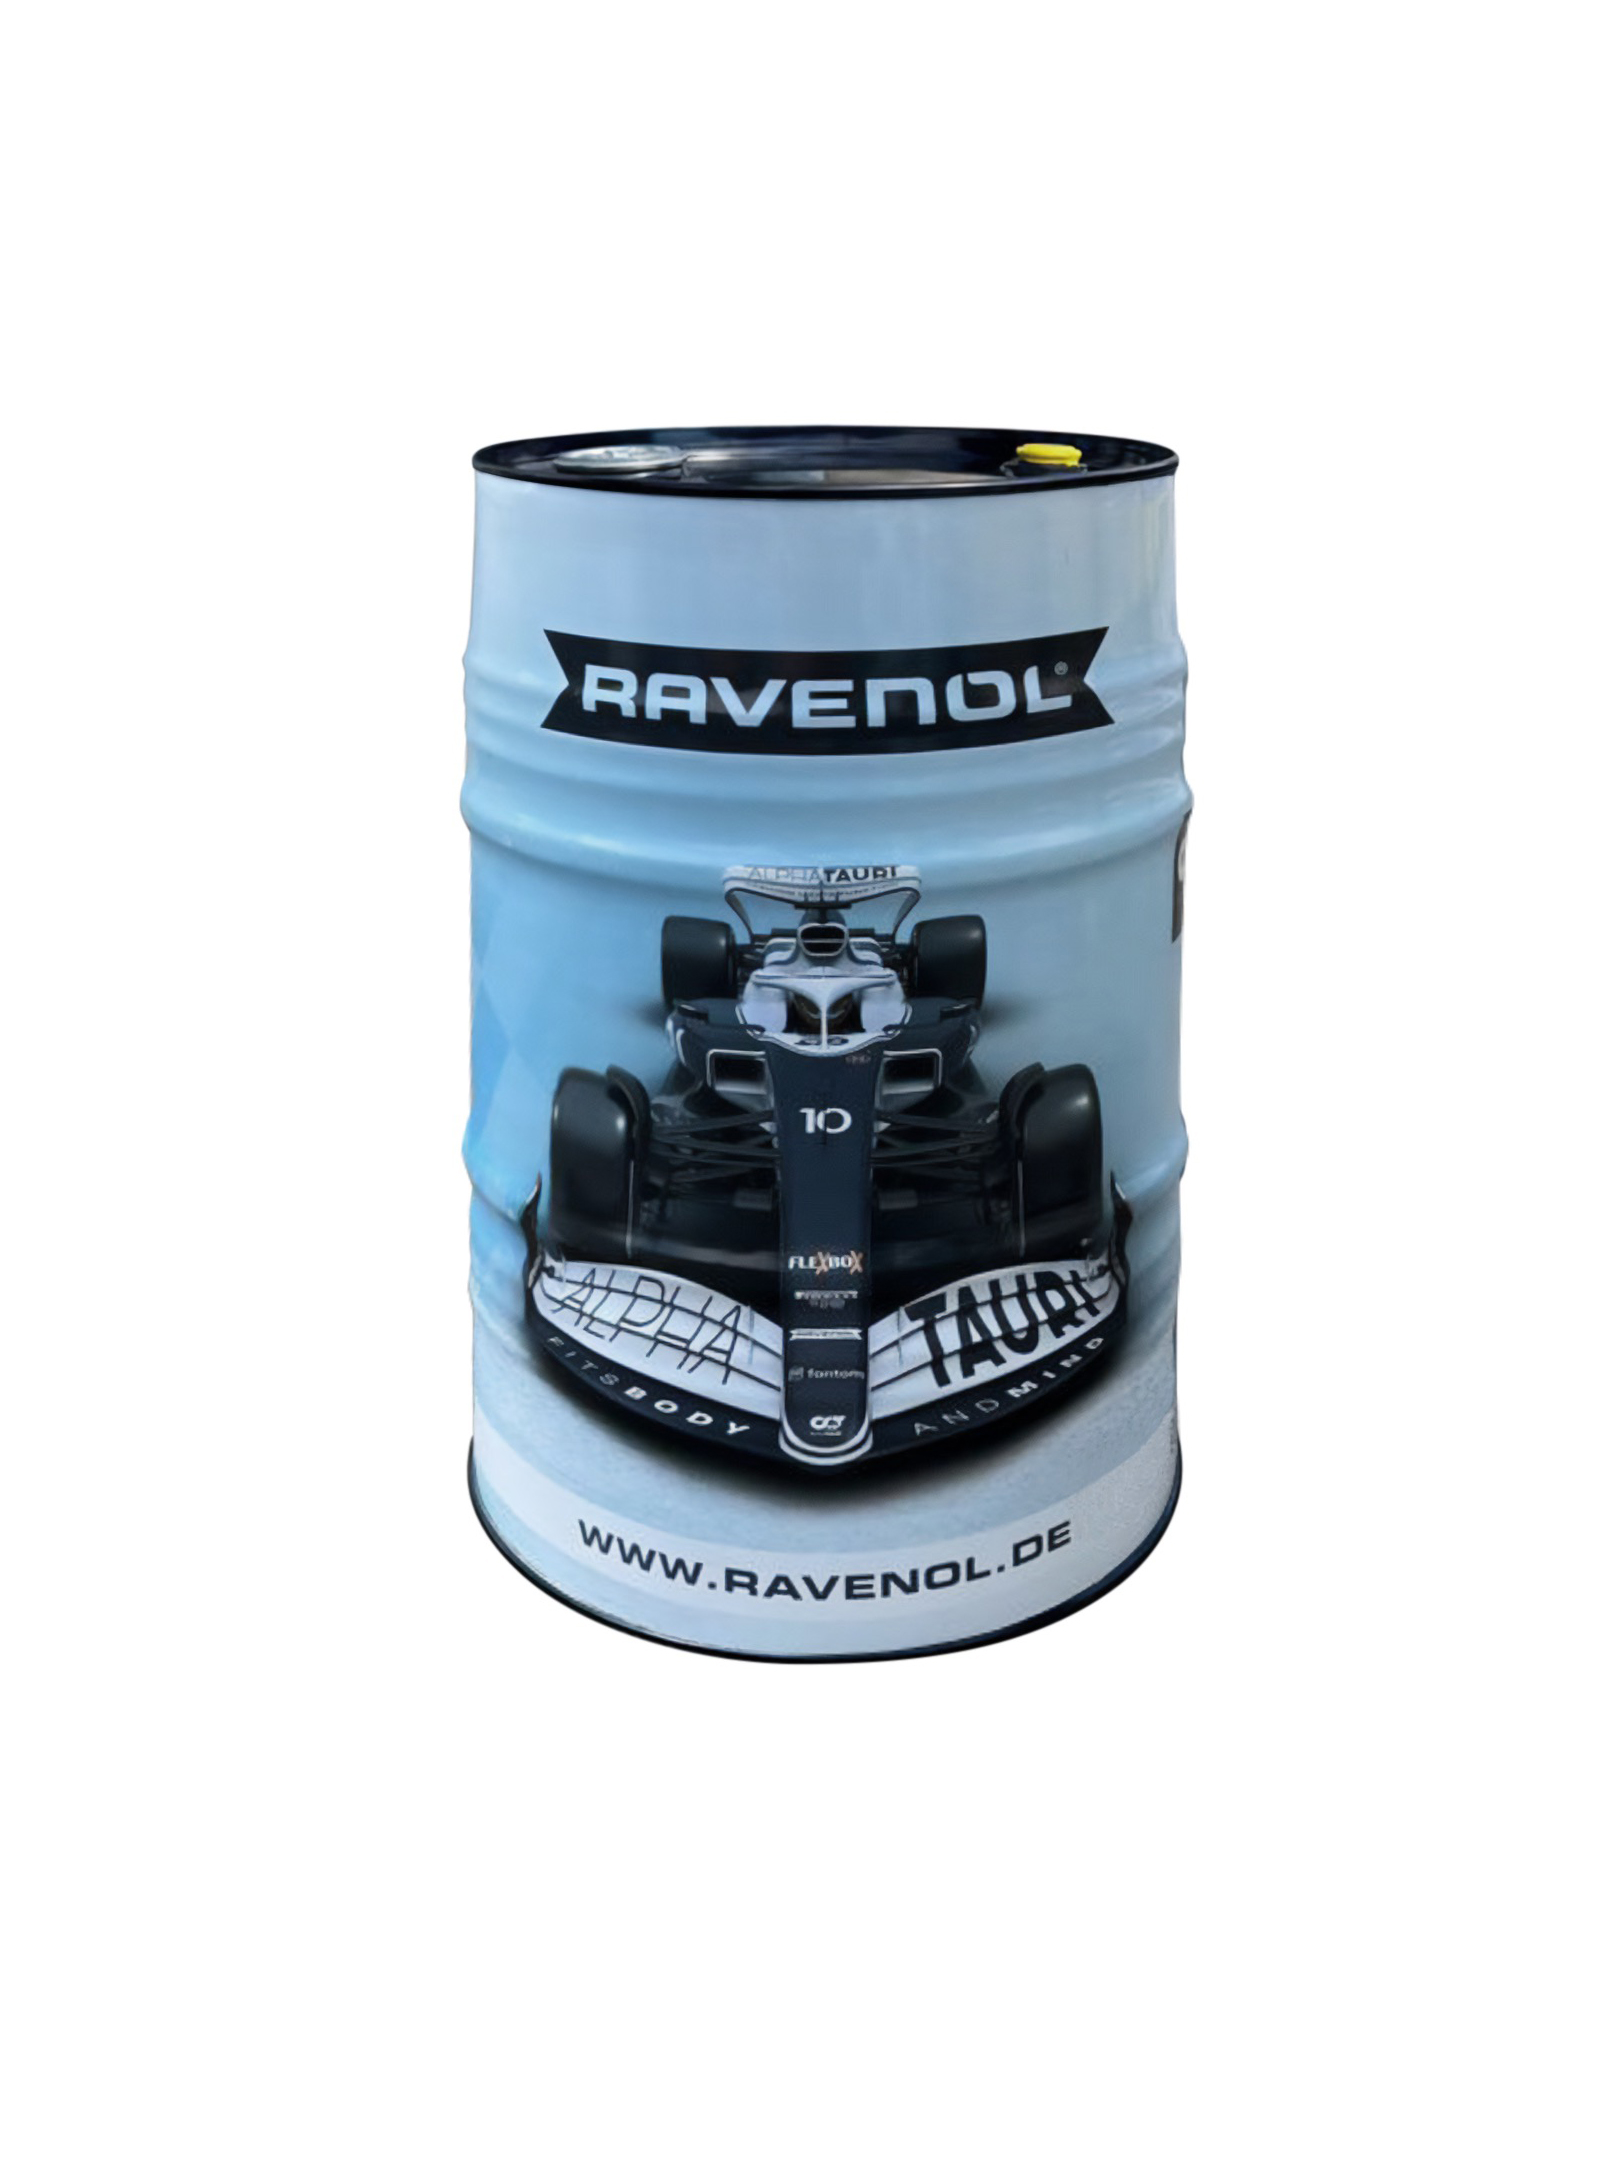 RAVENOL Formel Diesel Super SAE 20W-50